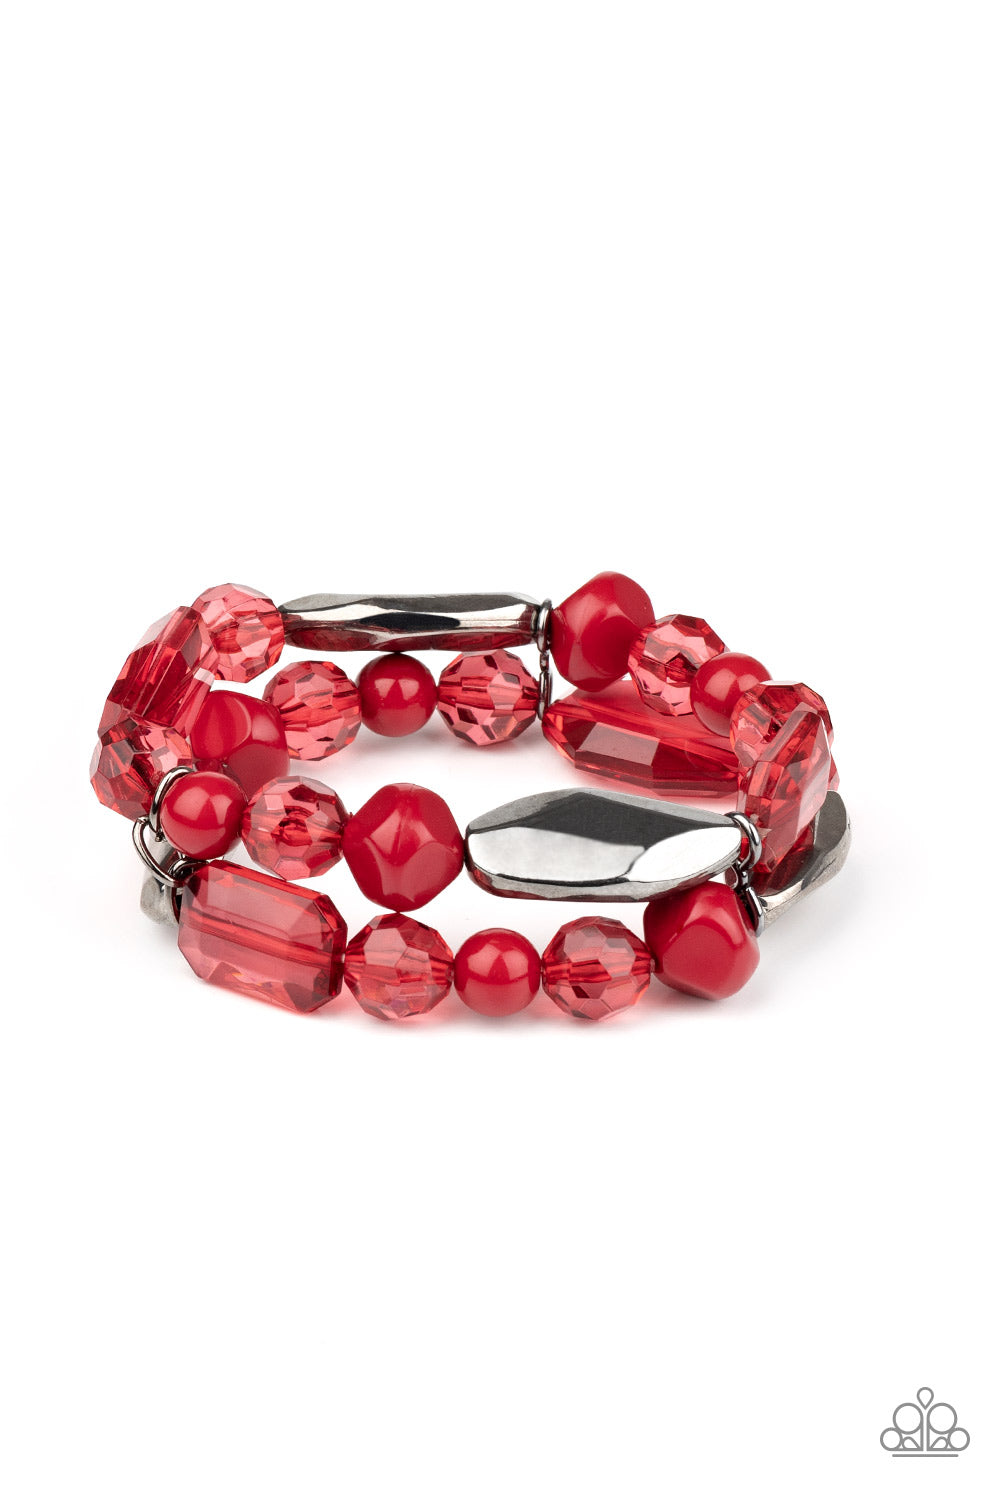 Rockin Rock Candy Red Bracelet - Paparazzi Accessories